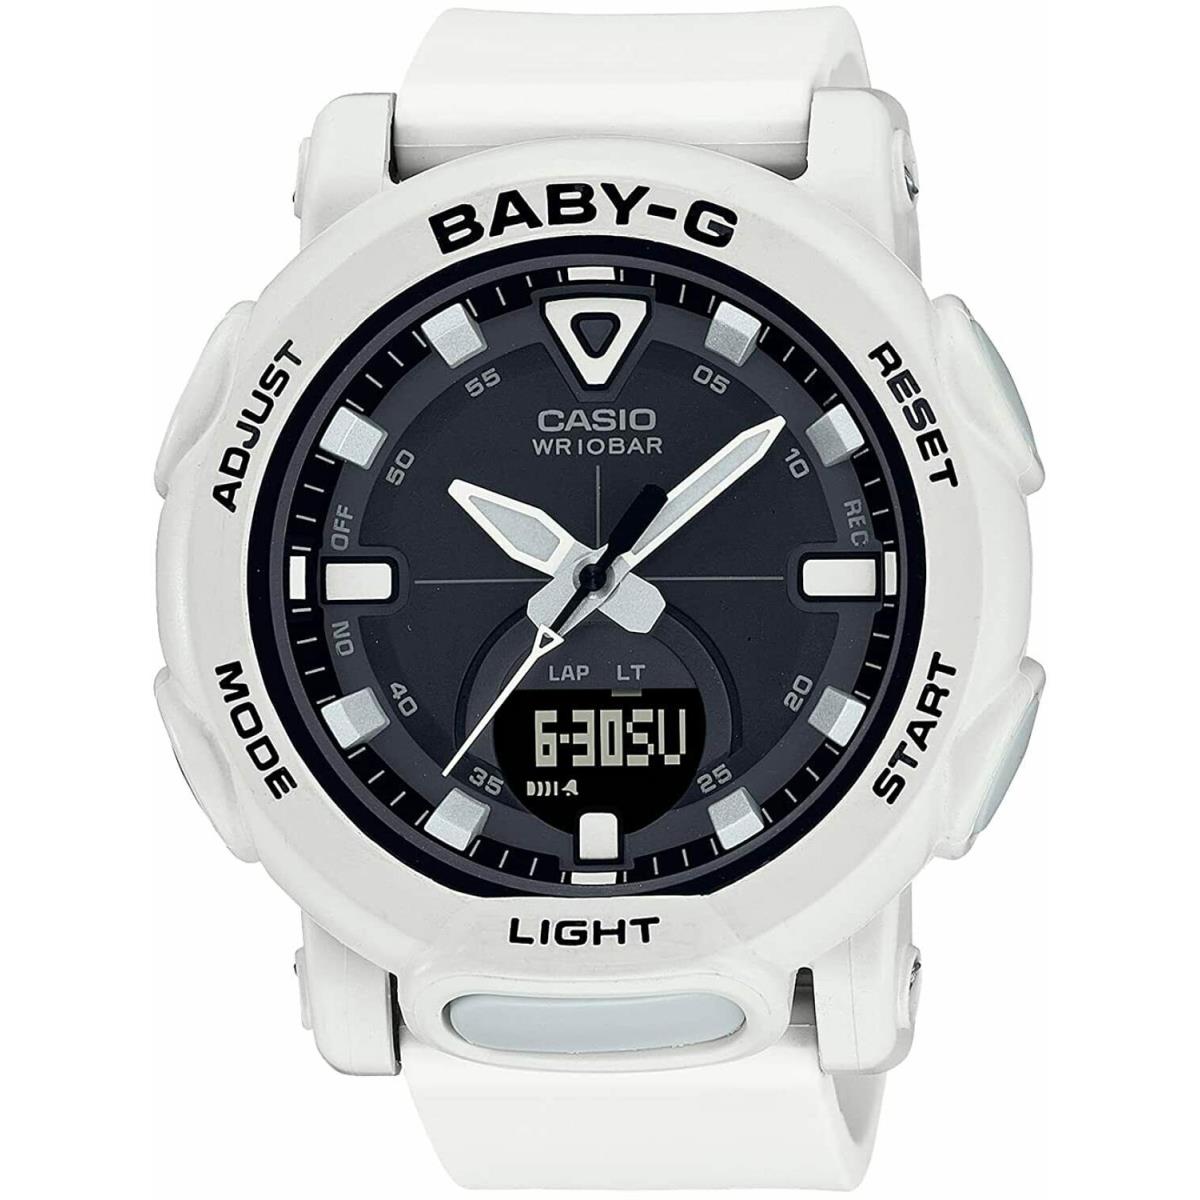 Casio Baby-g BGA310-7A2 White x Black Color Chrono Analog Digital Women Watch